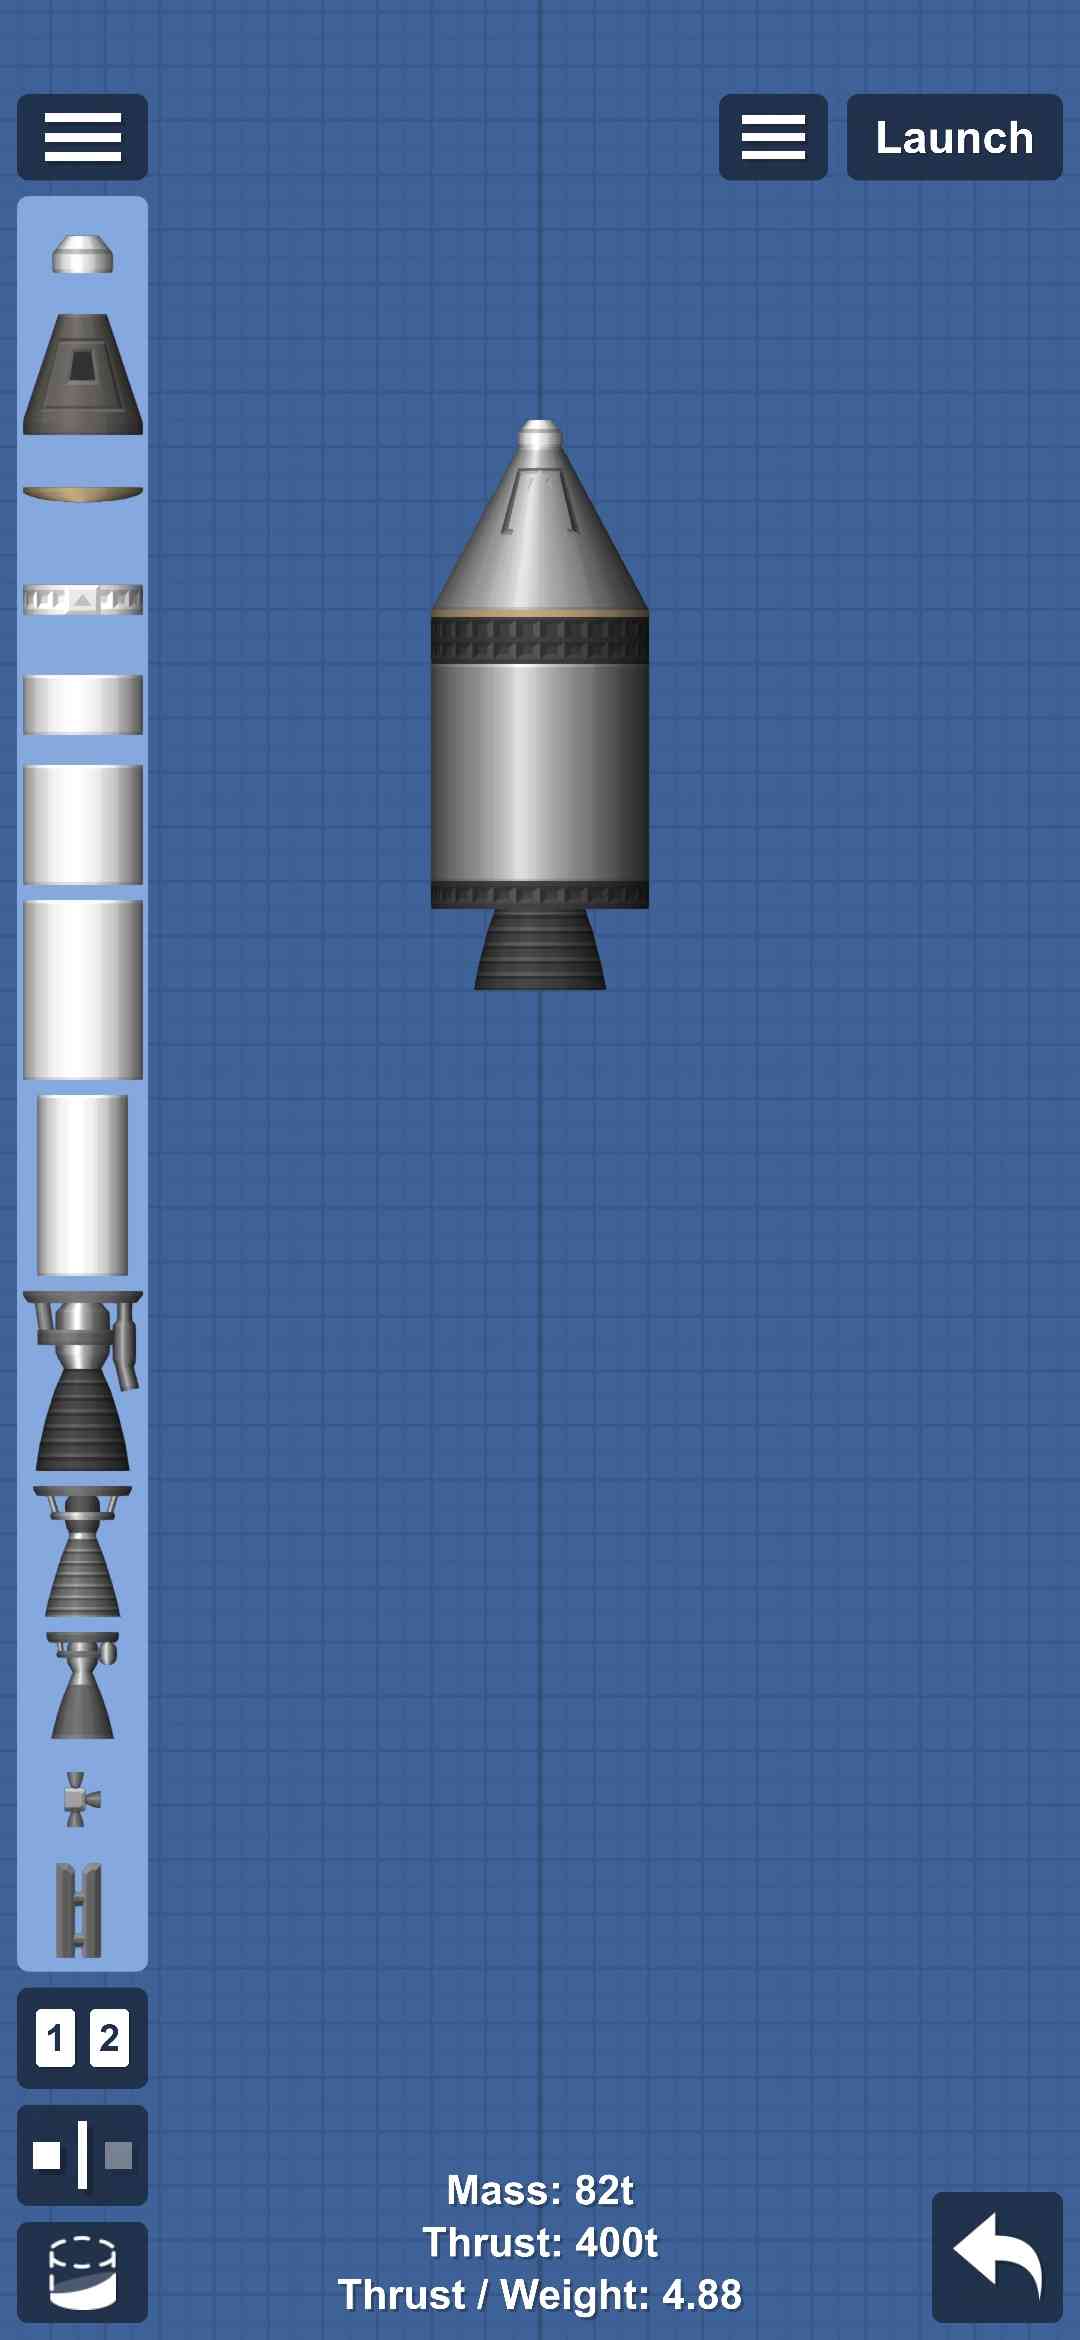 Apollo command module Blueprint for Spaceflight Simulator